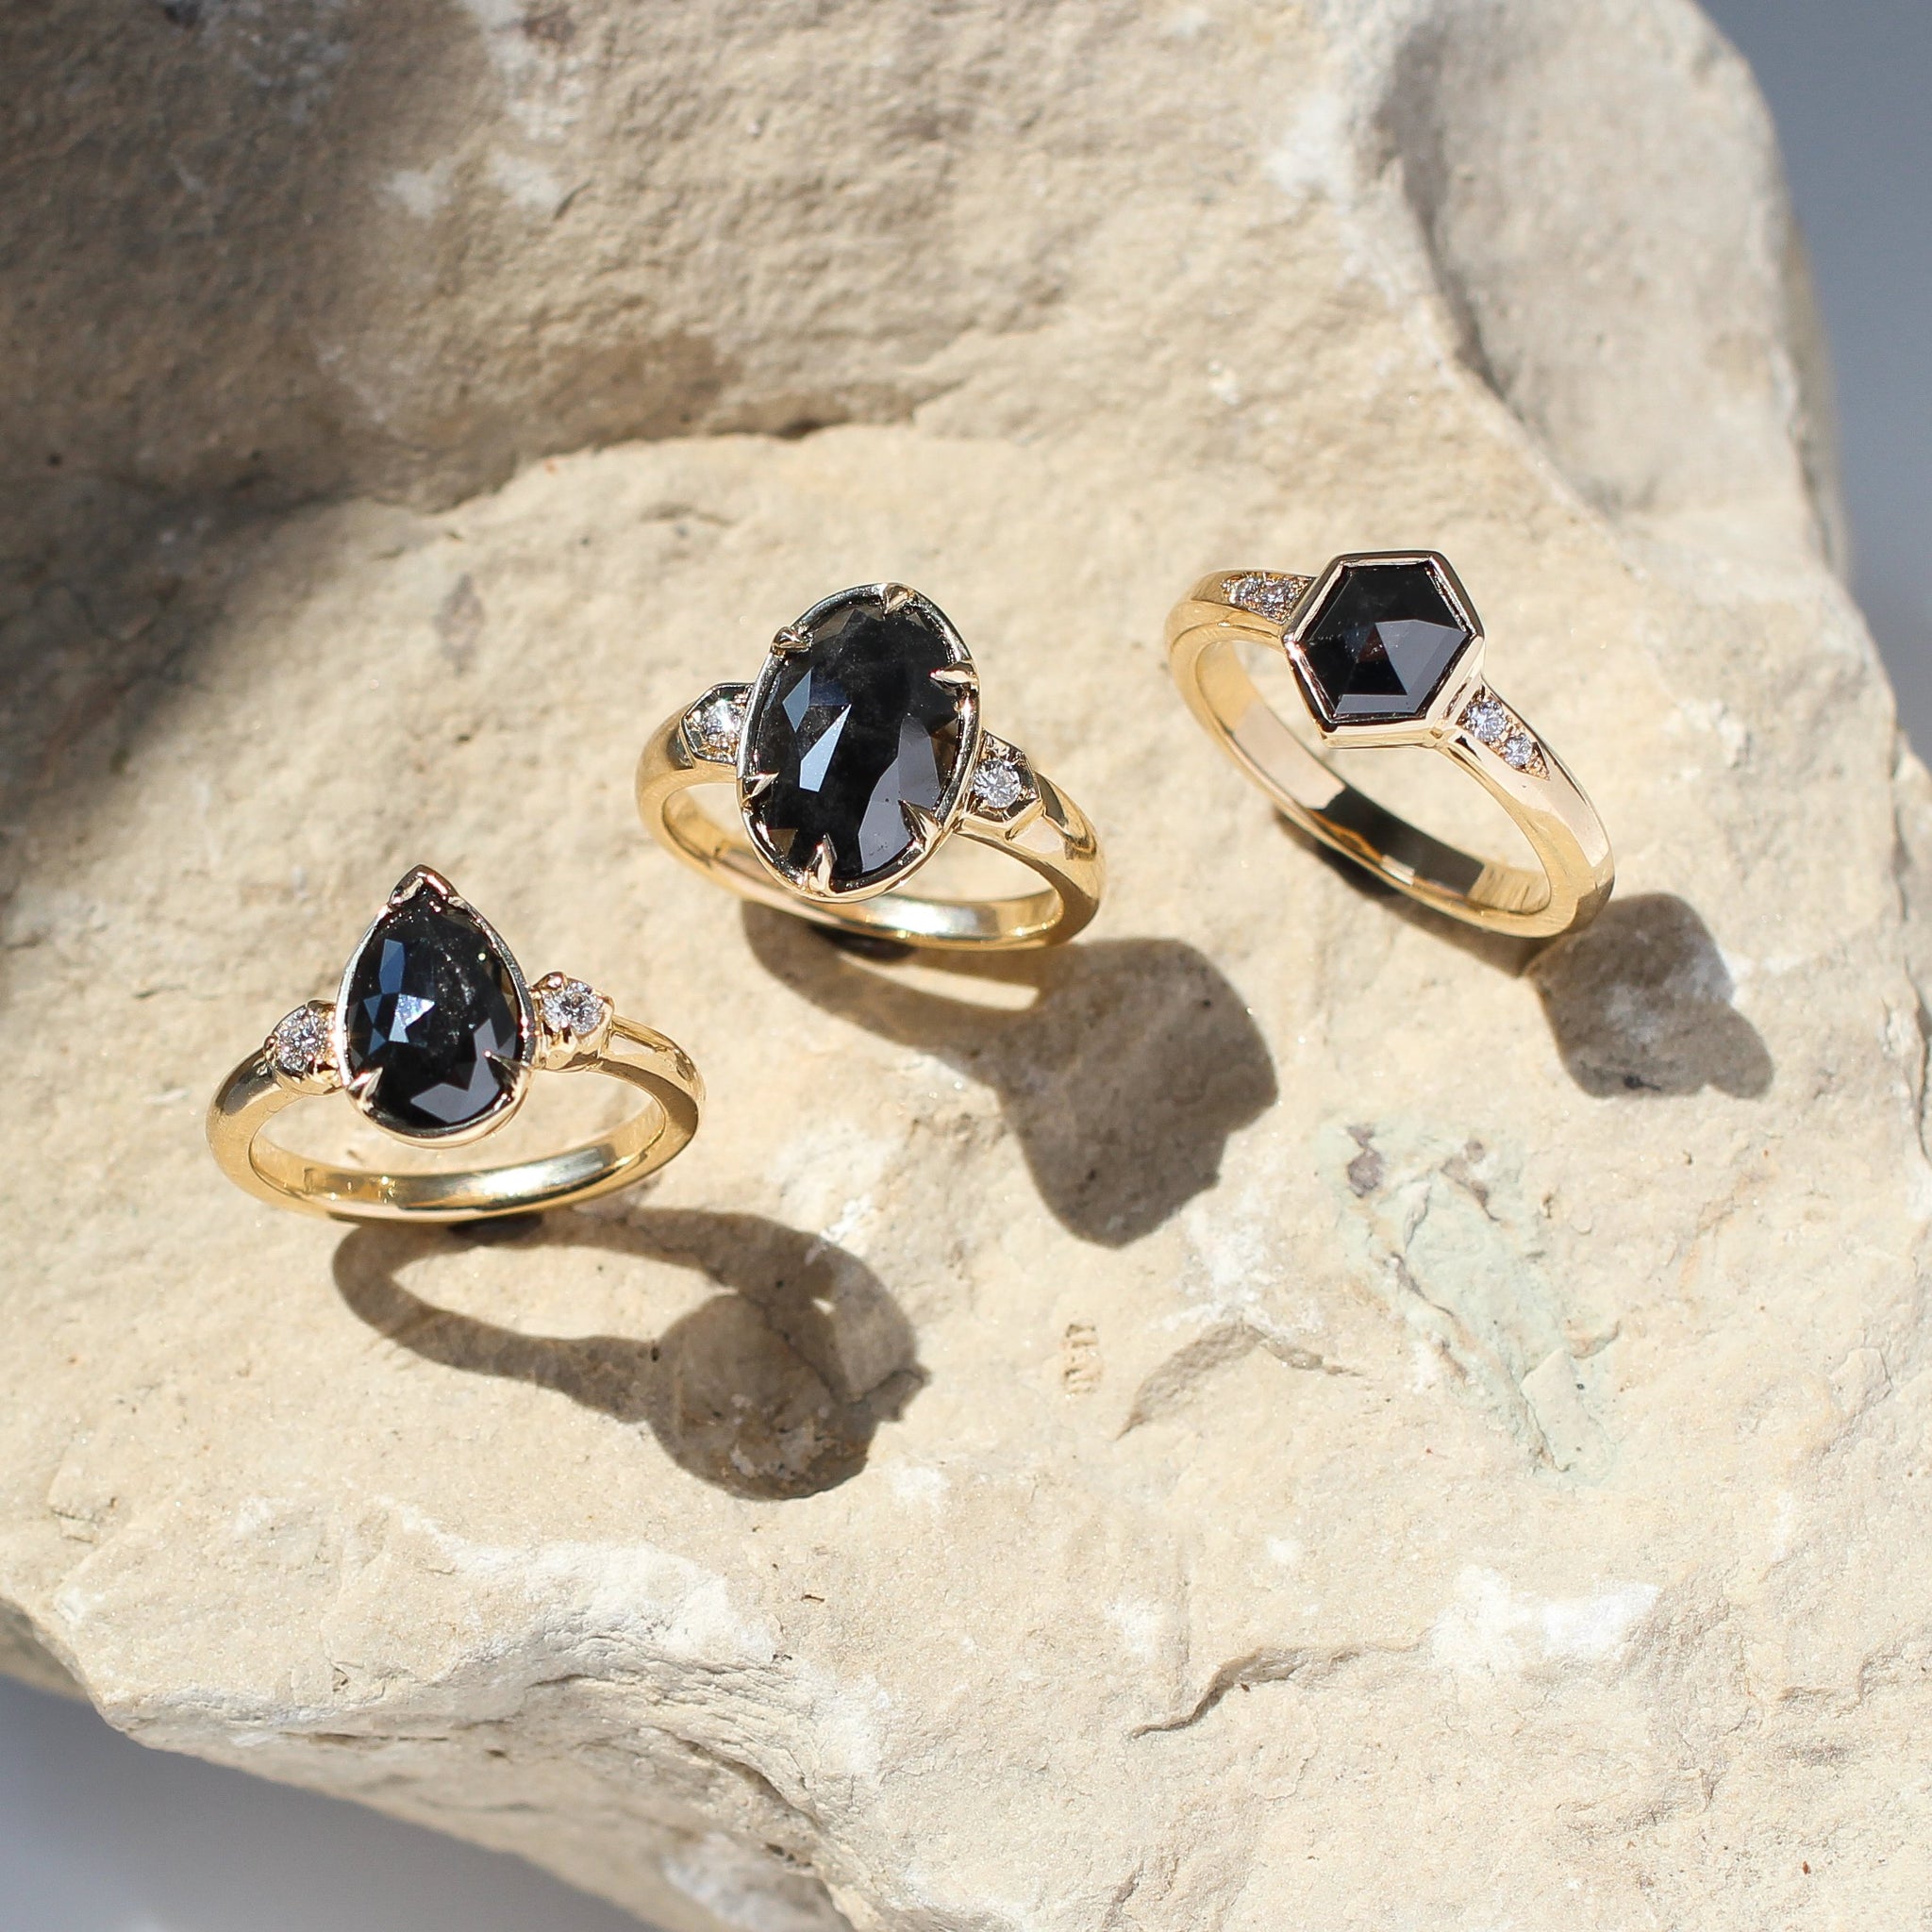 Black diamond engagement rings